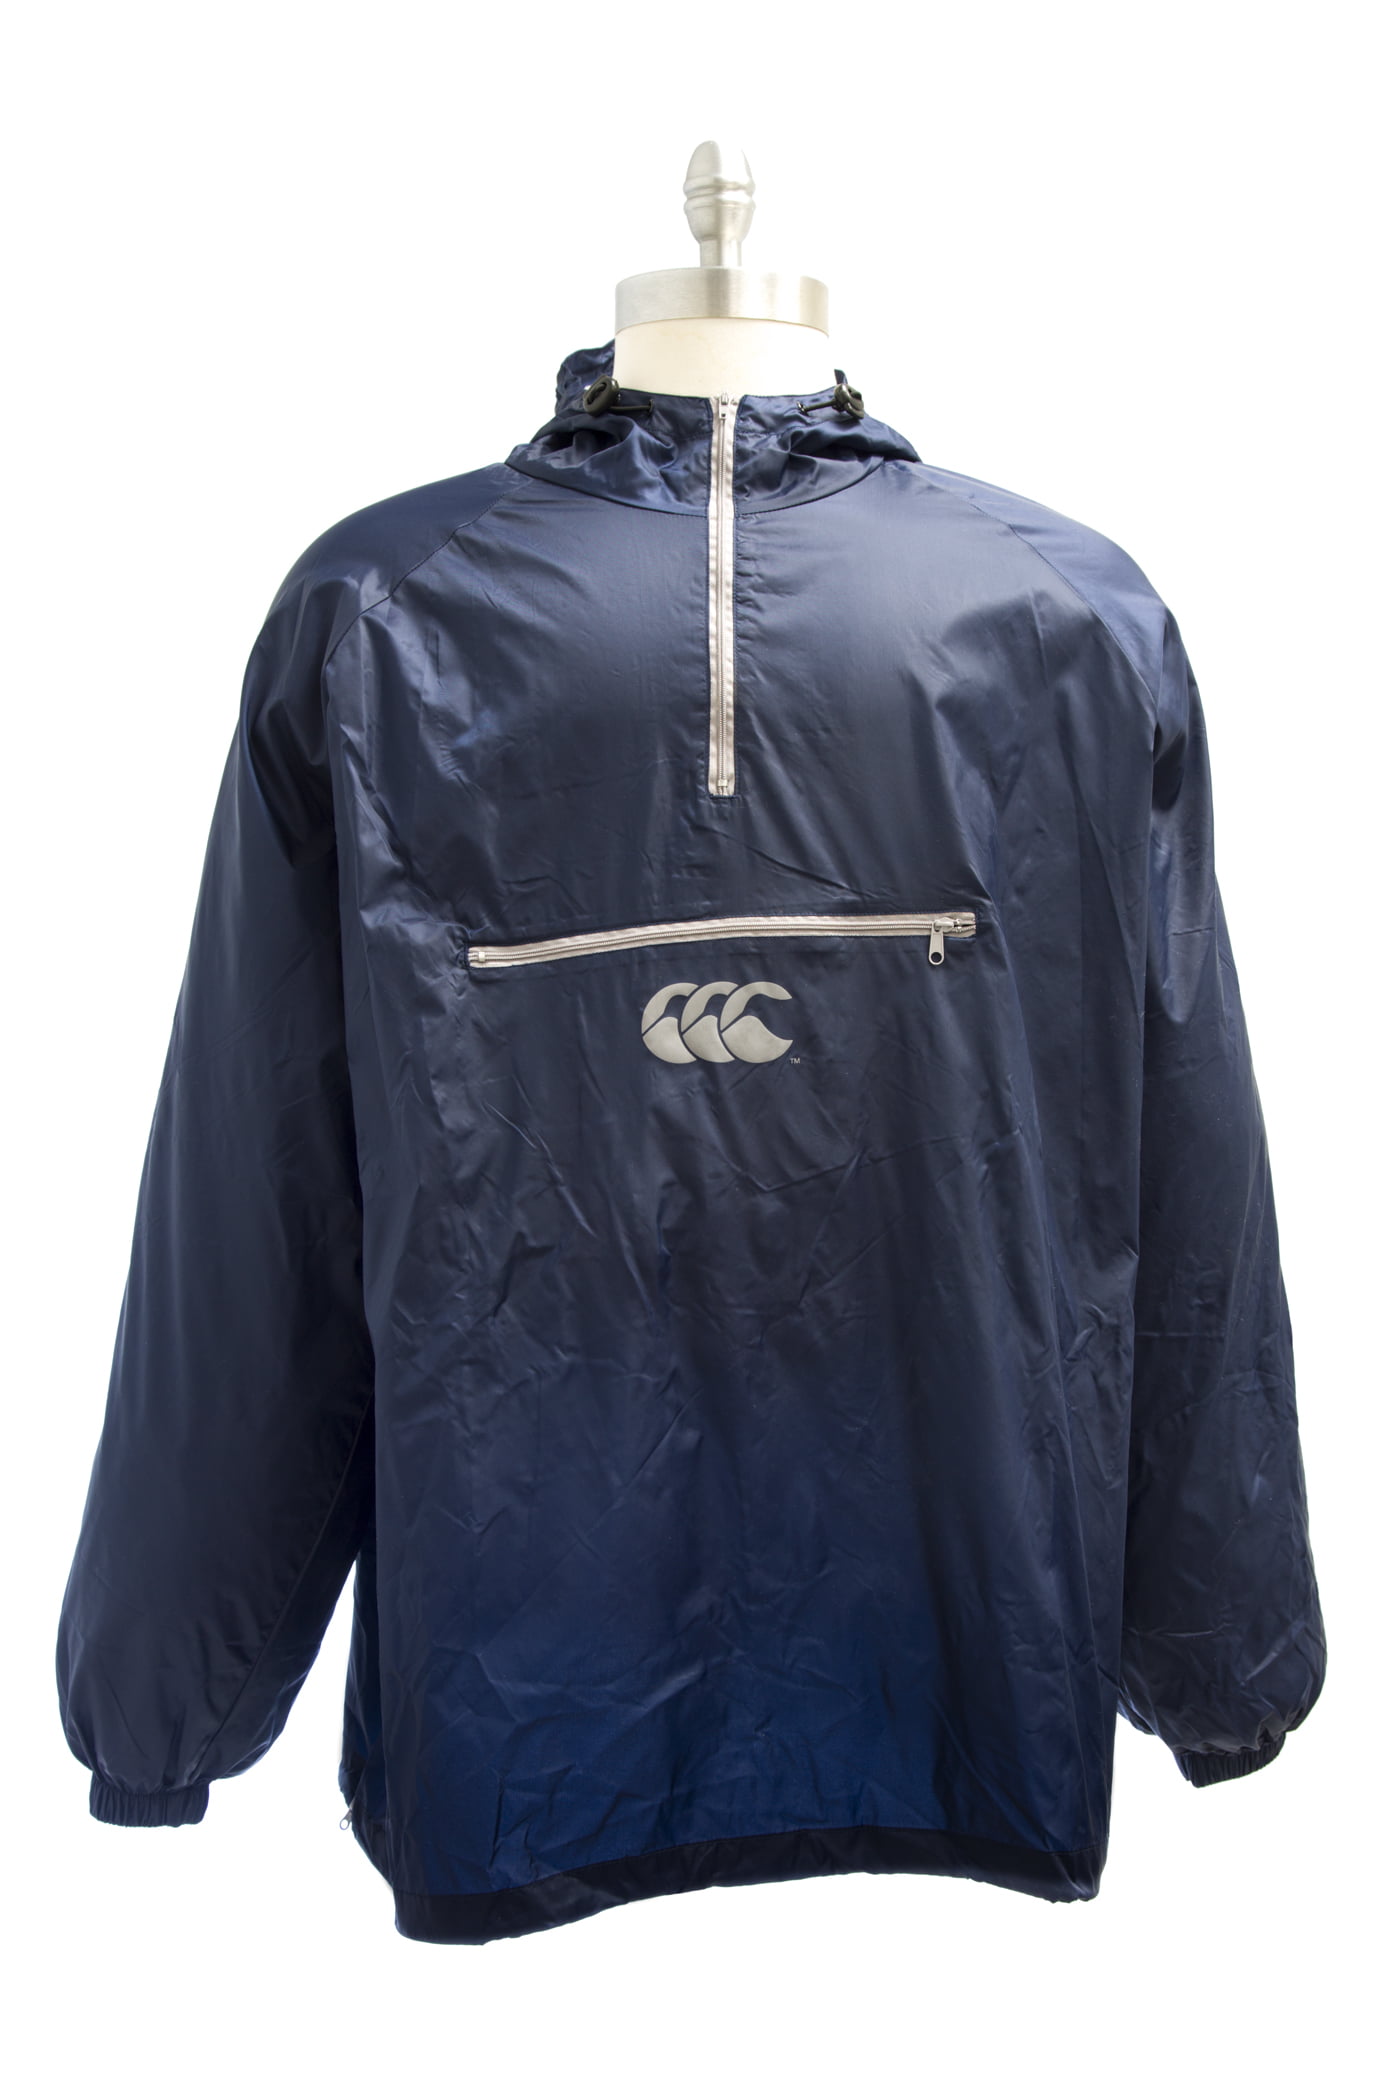 CCC Canterbury - CCC Canterbury of New Zealand Men's Half Zip Jacket ...